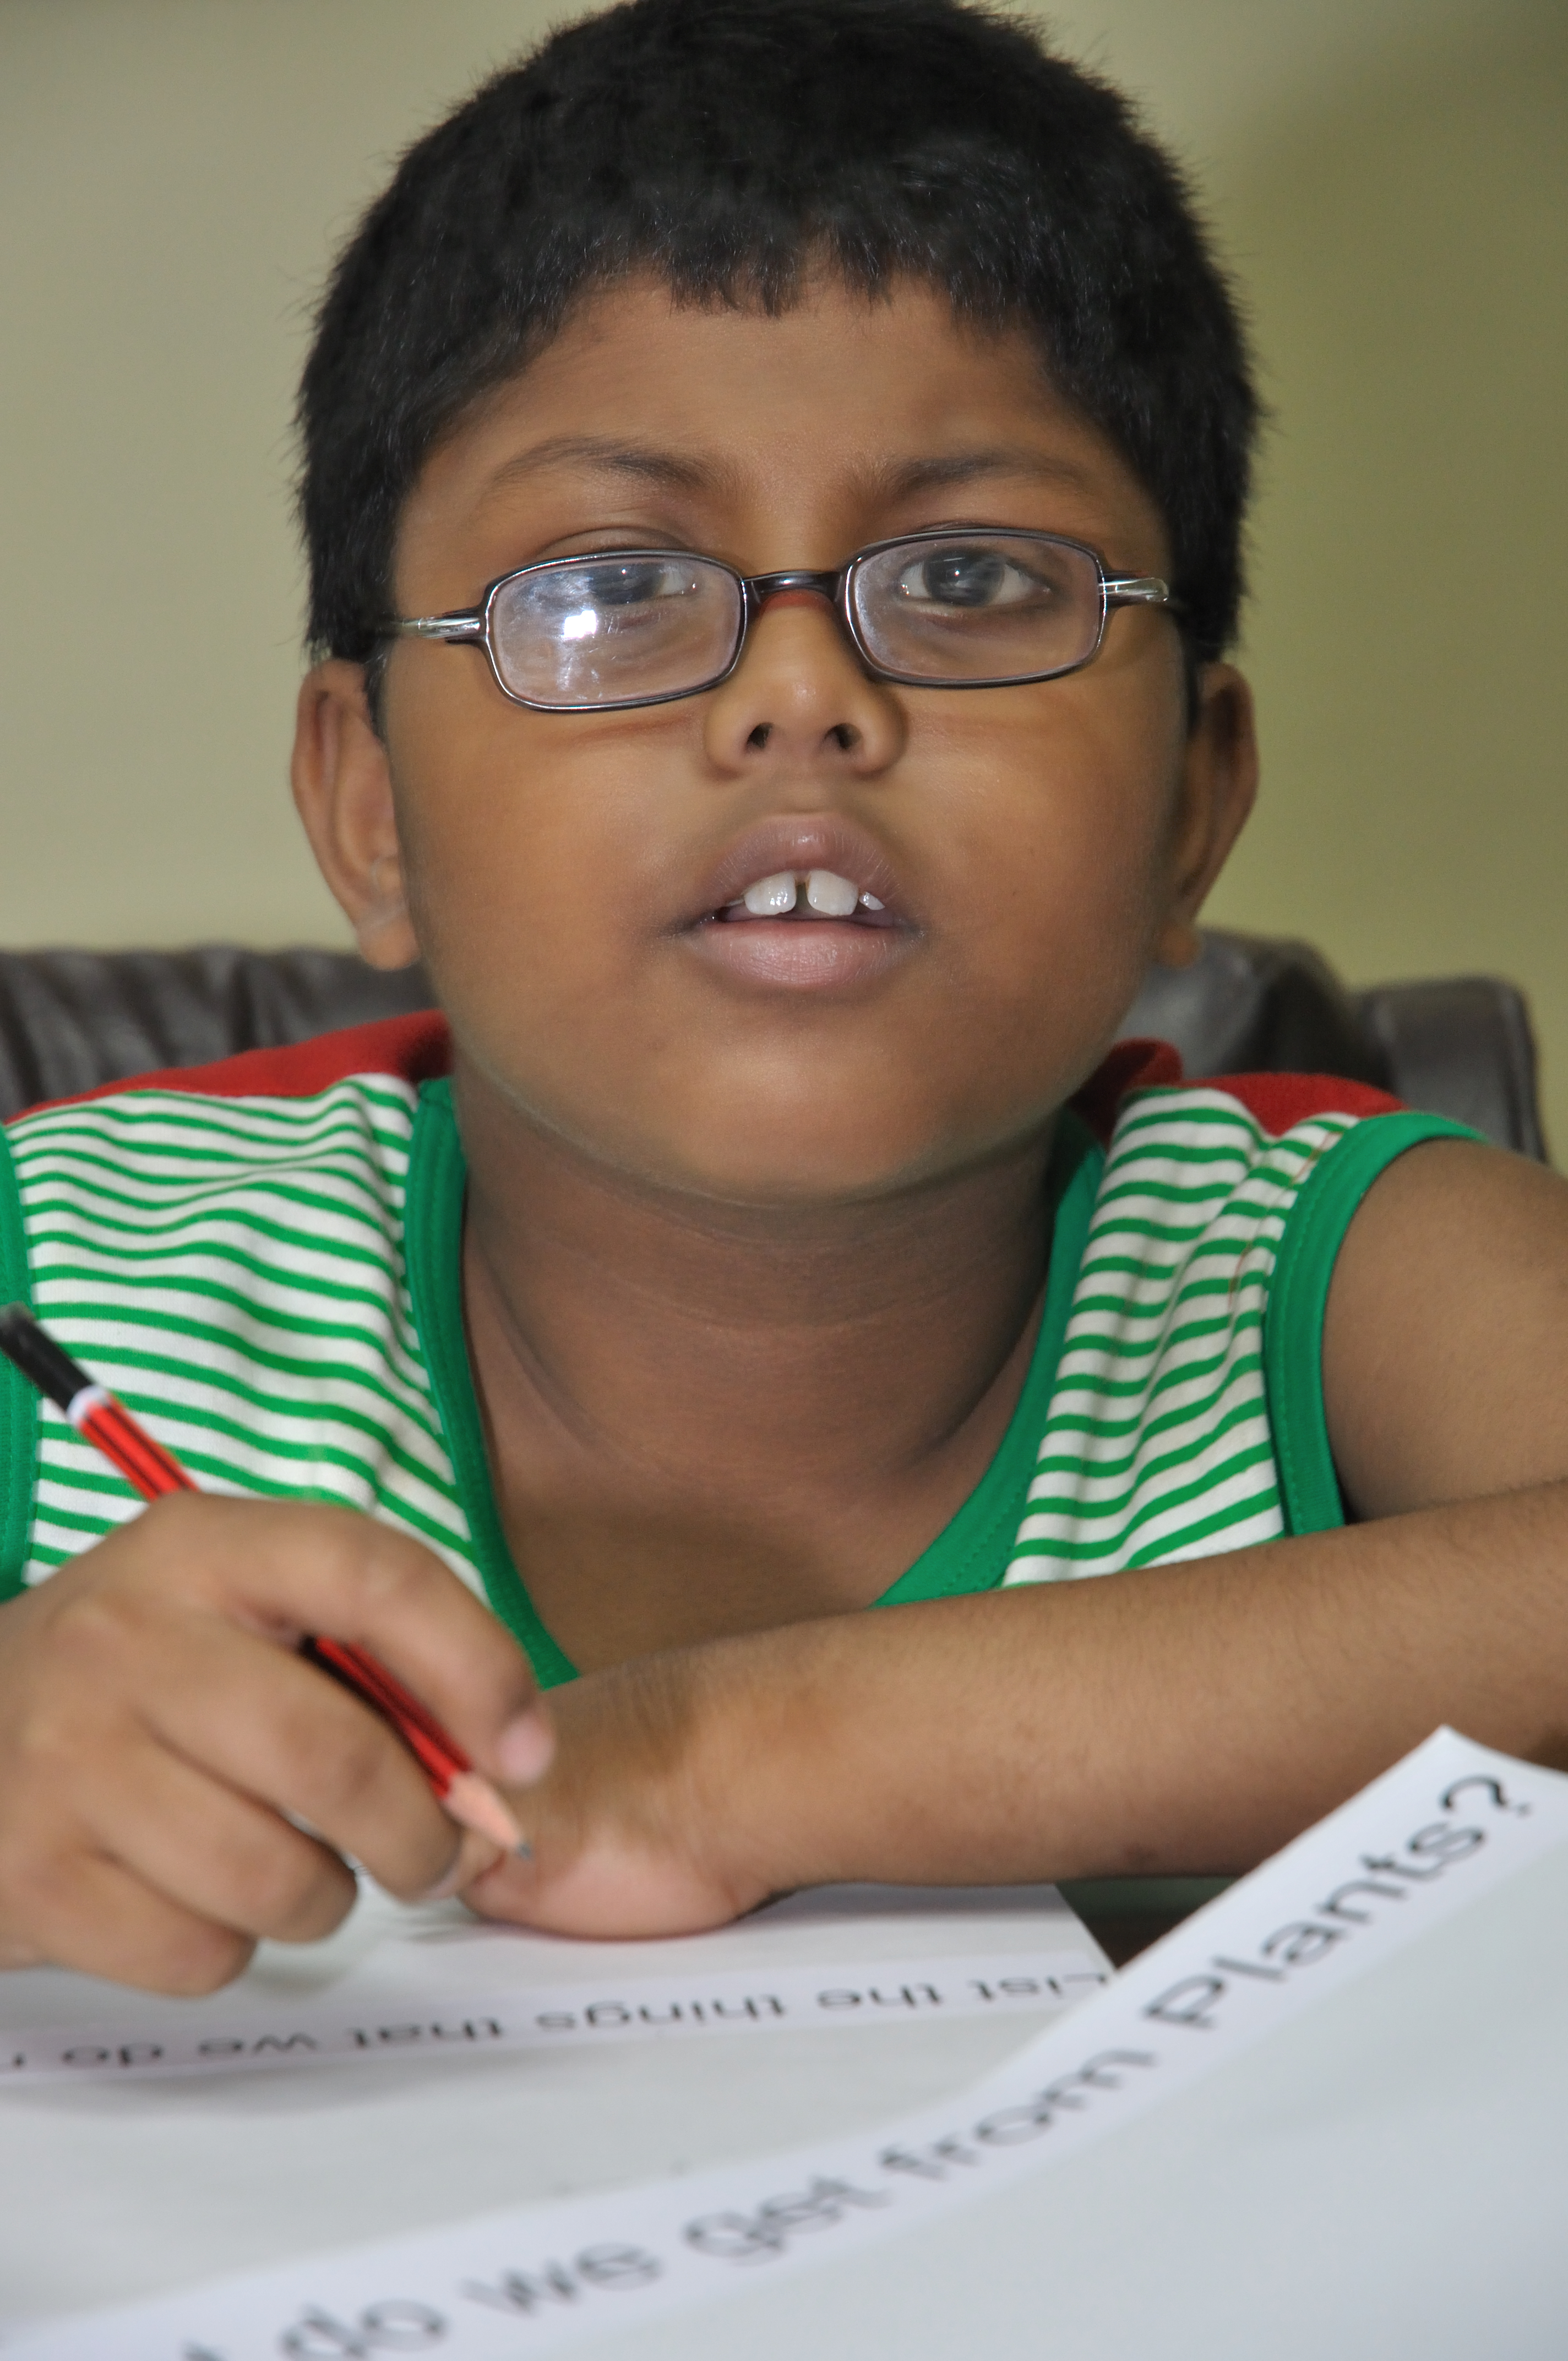 File:Indian Boy Child 4975.JPG - Wikimedia Commons